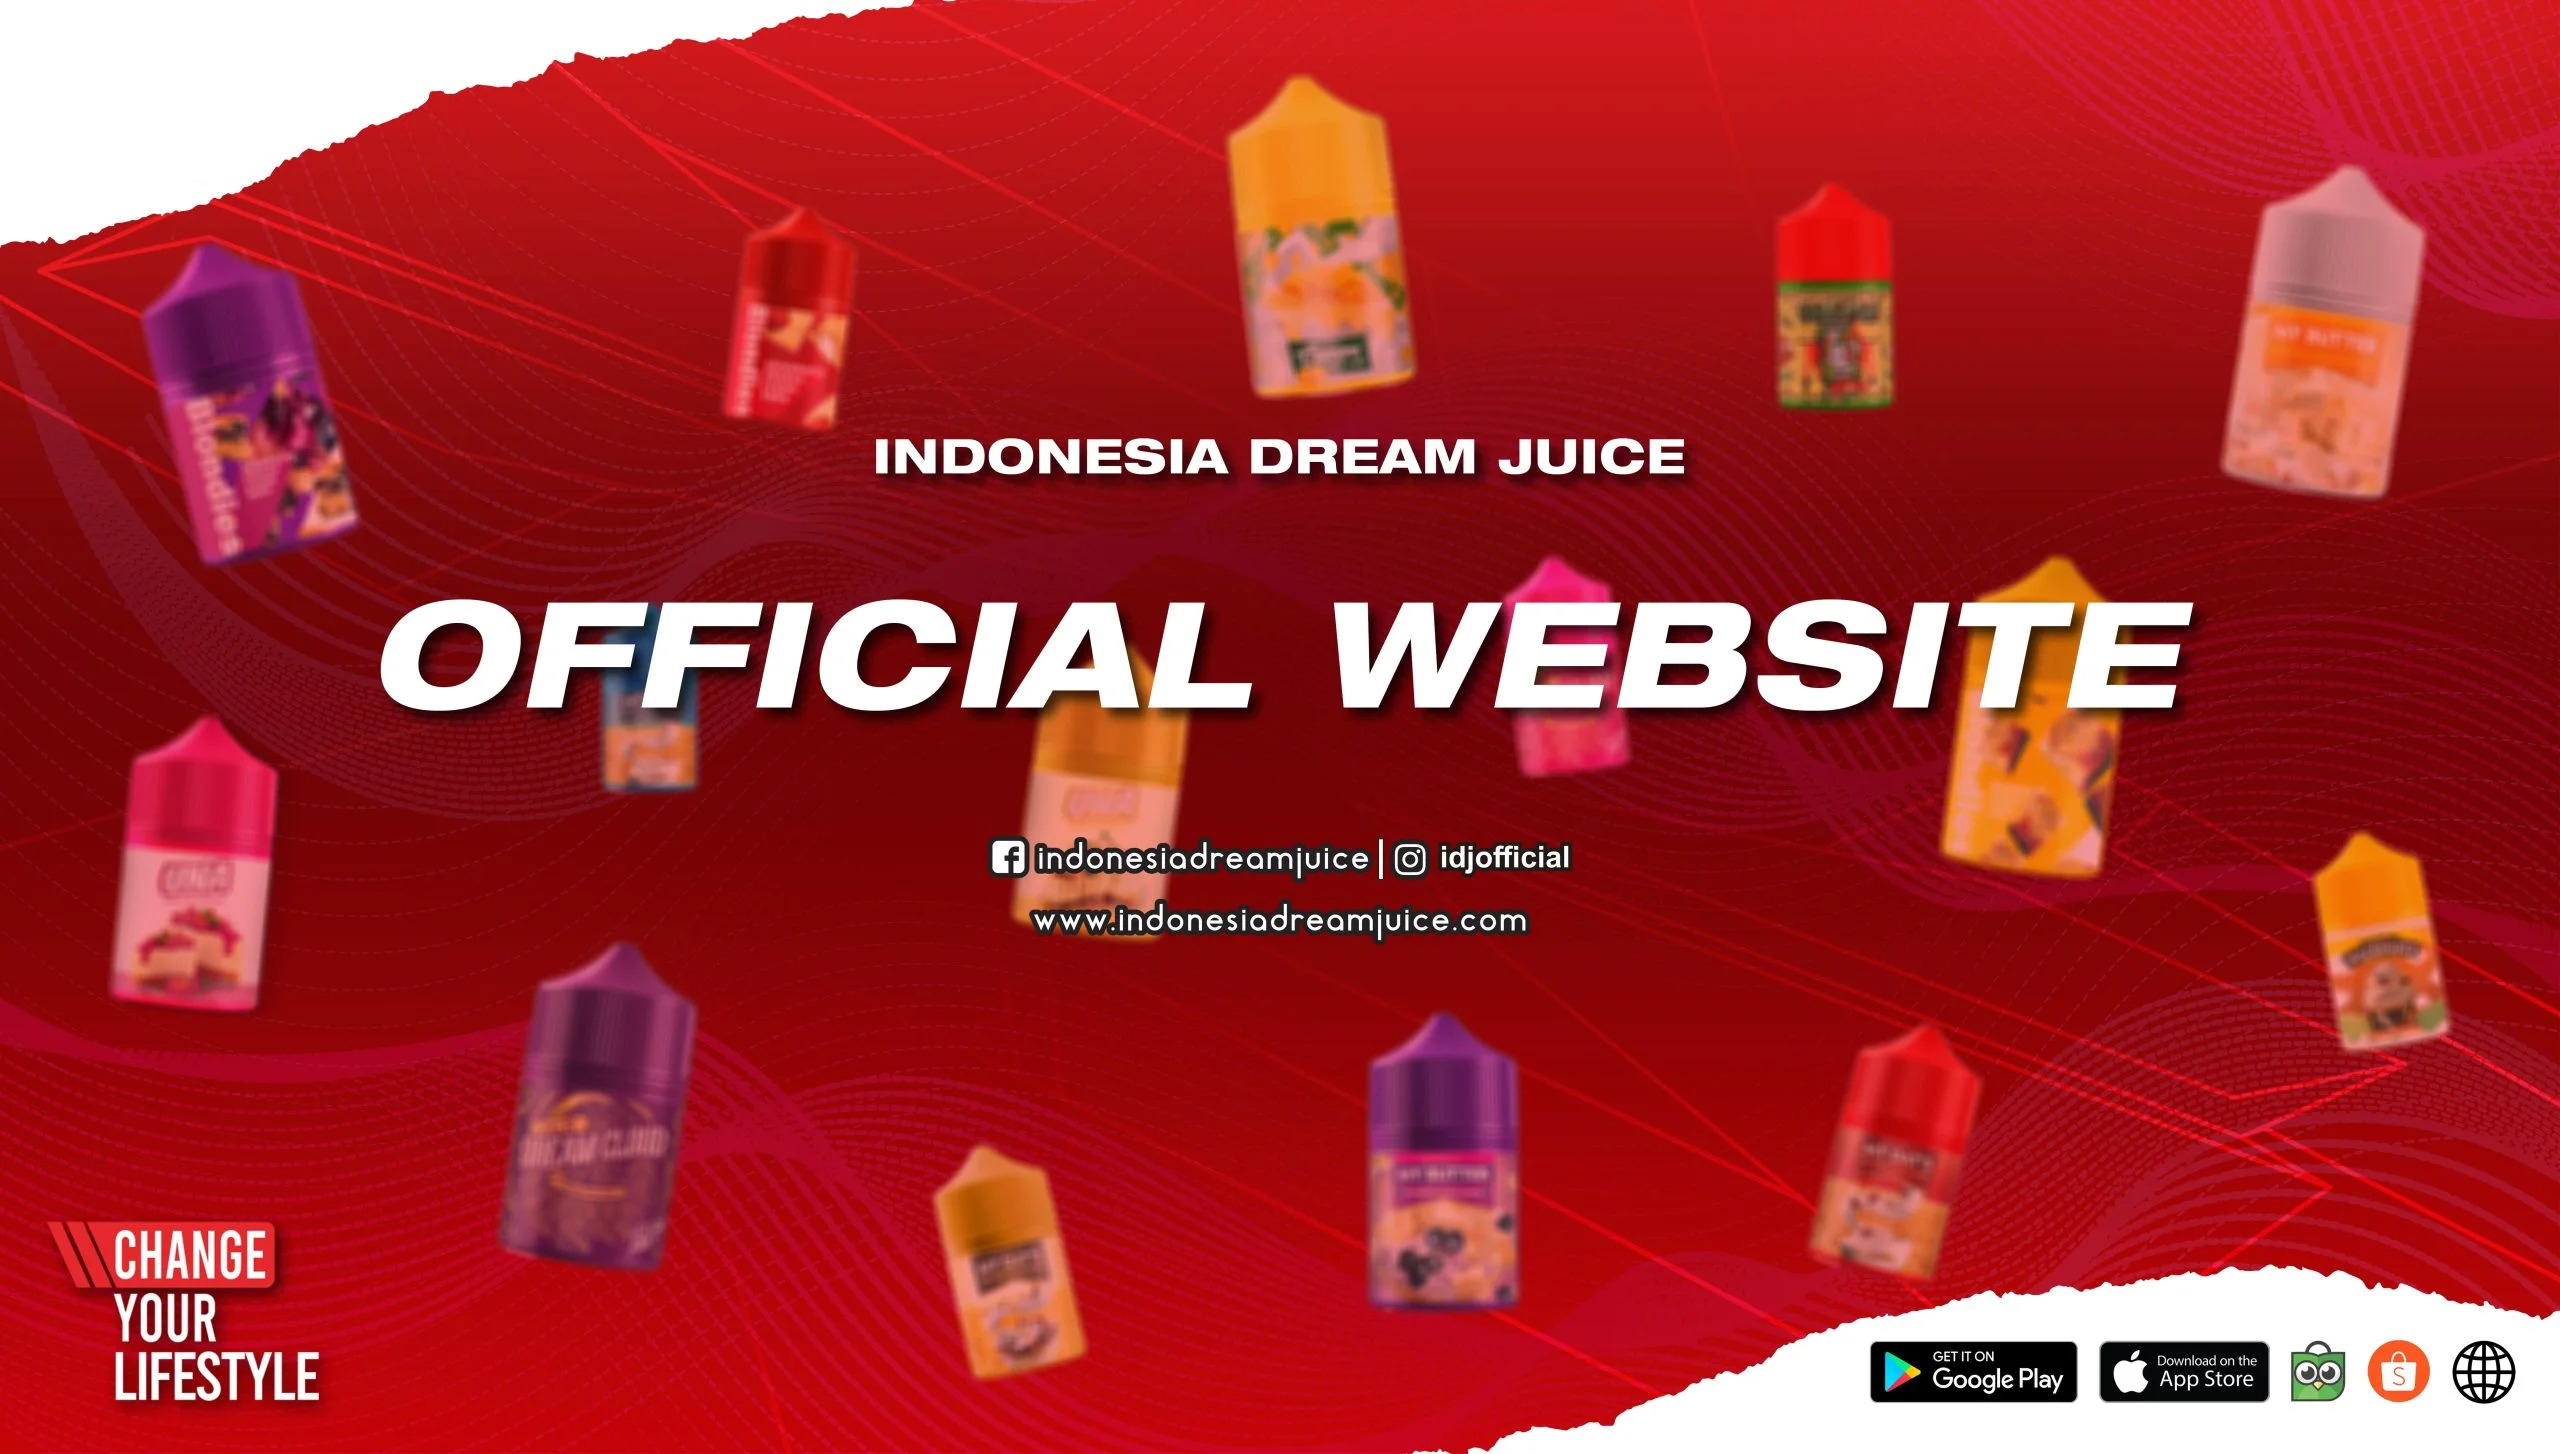 INDONESIA DREAM JUICE - OFFICIAL WEBSITE - indonesiadreamjuice - idjofficial - www.indonesiadreamjuice.com